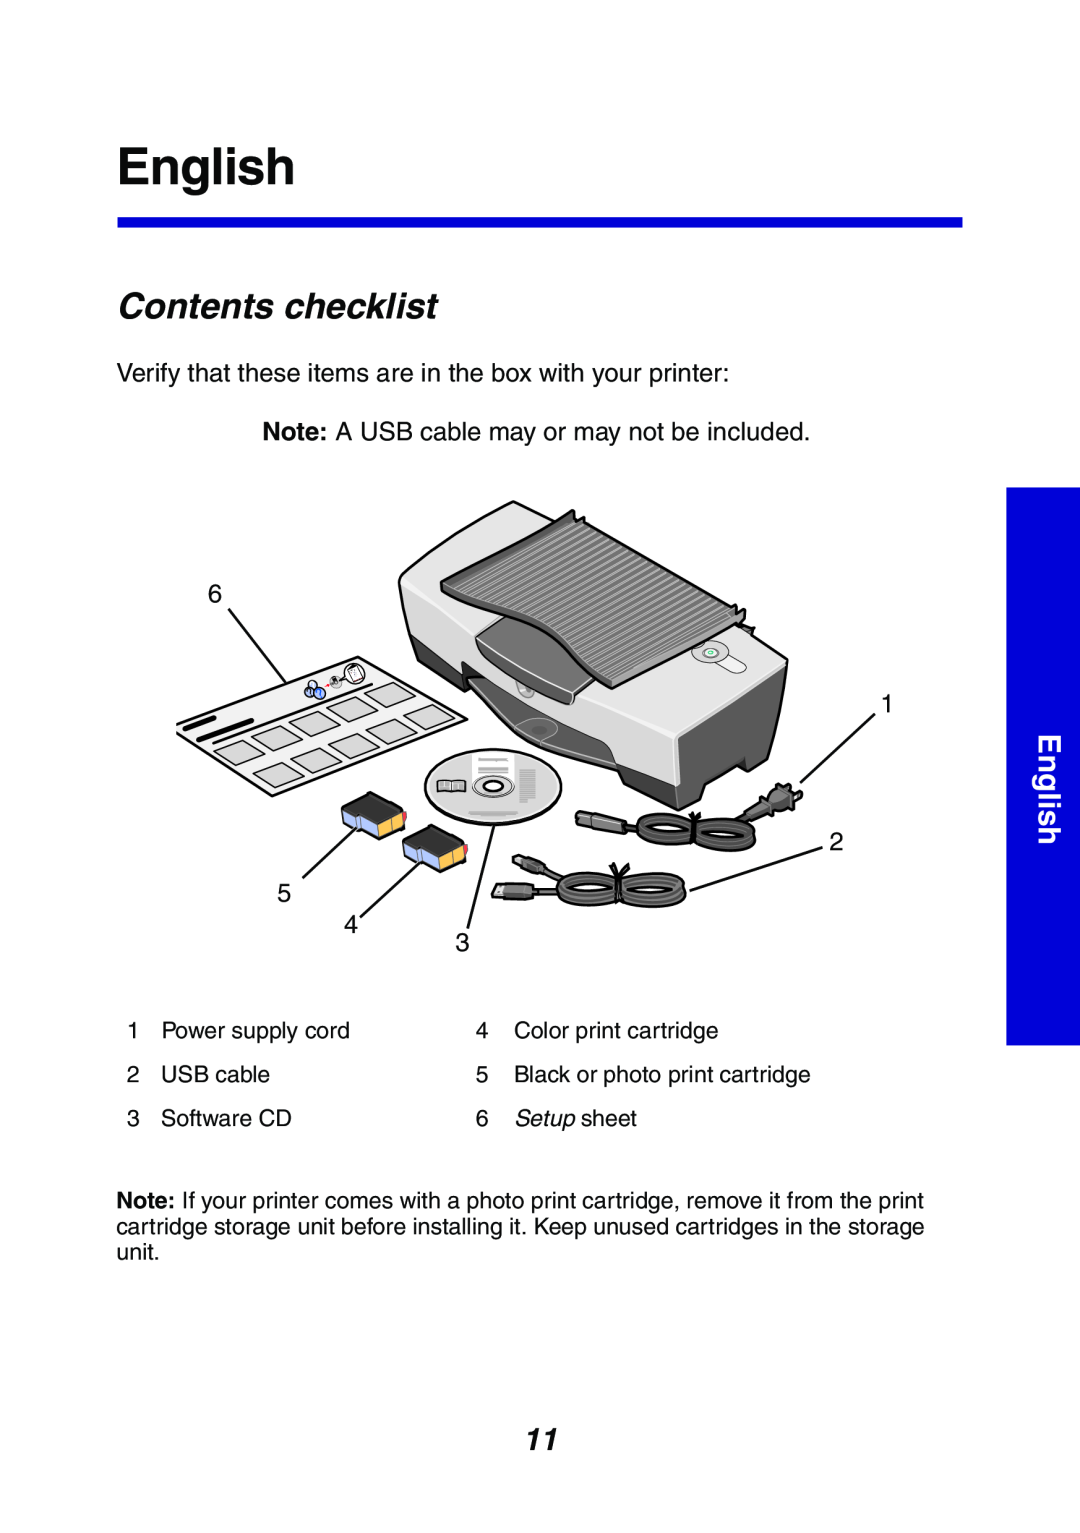 Lexmark 810 Series manual Contents checklist, English, Setup sheet 